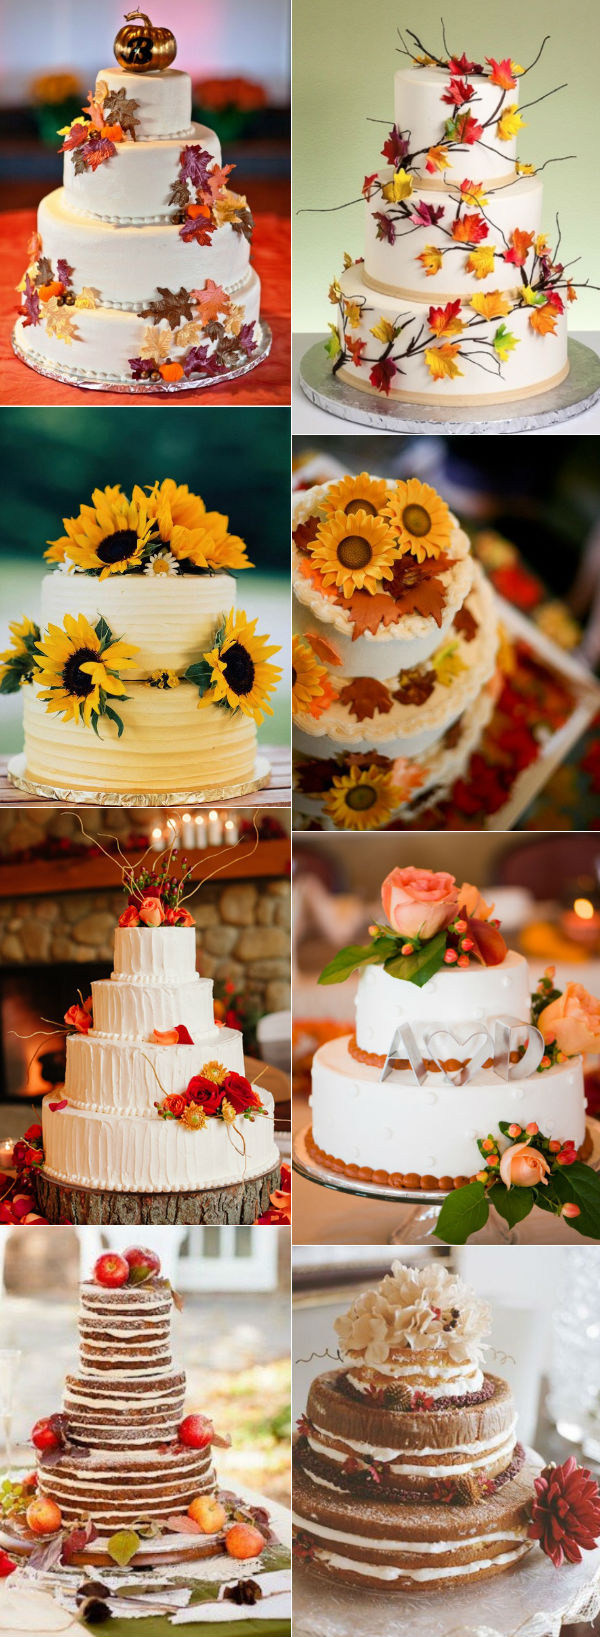 Rustic Fall Wedding Cakes
 31 Beautiful Naked Wedding Cake Ideas For 2016